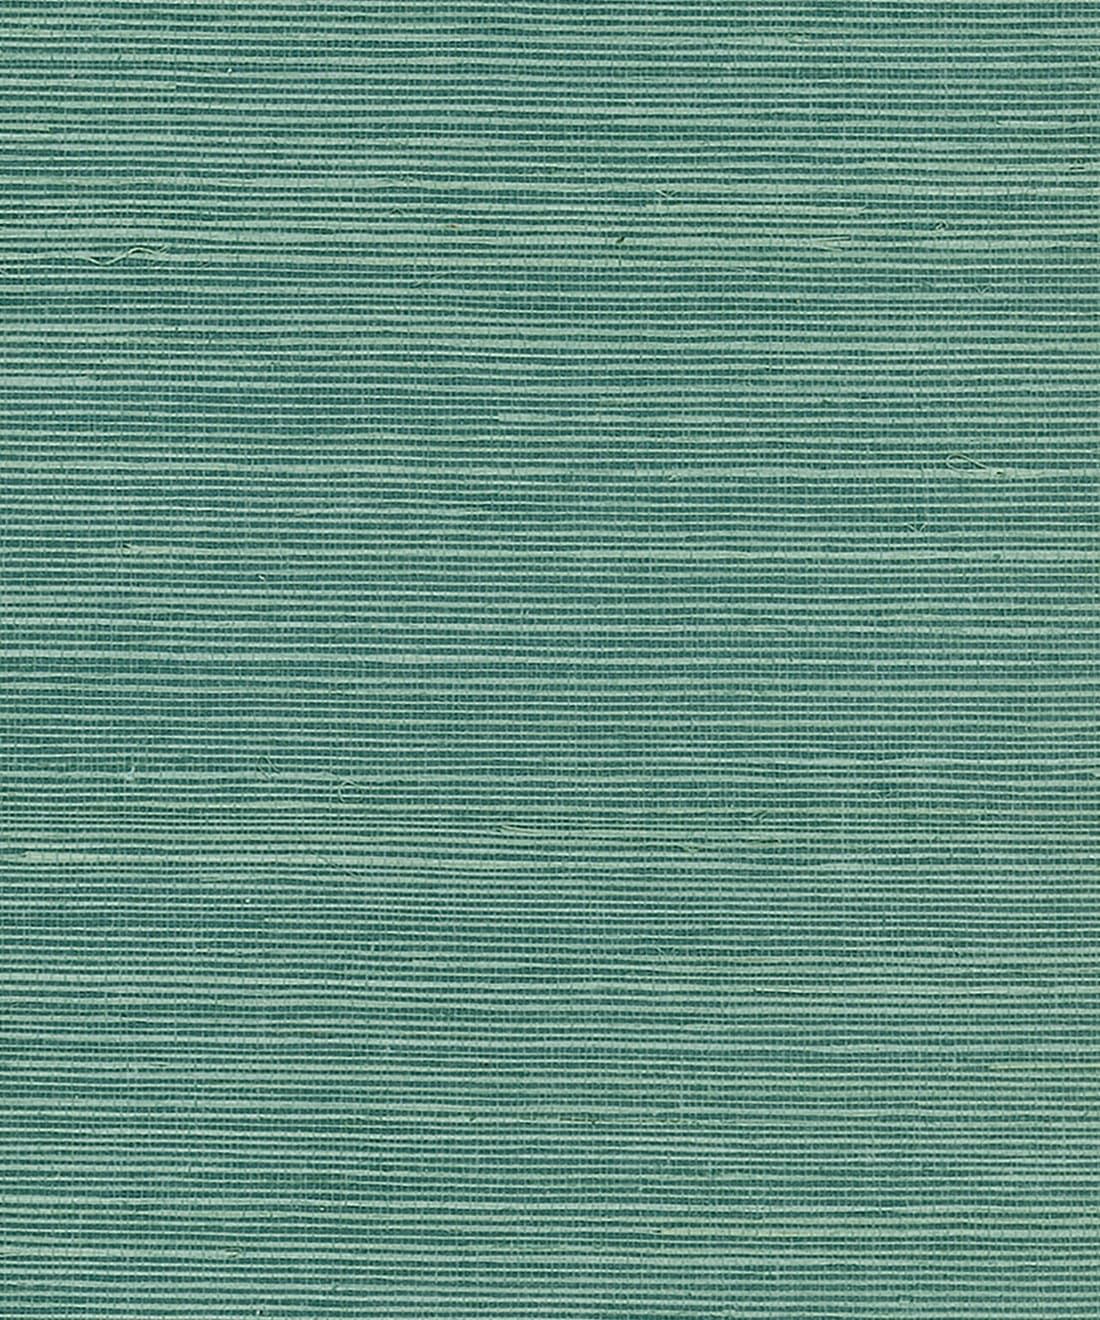 Winter Sisal Grasscloth Wallpaper - Ocean